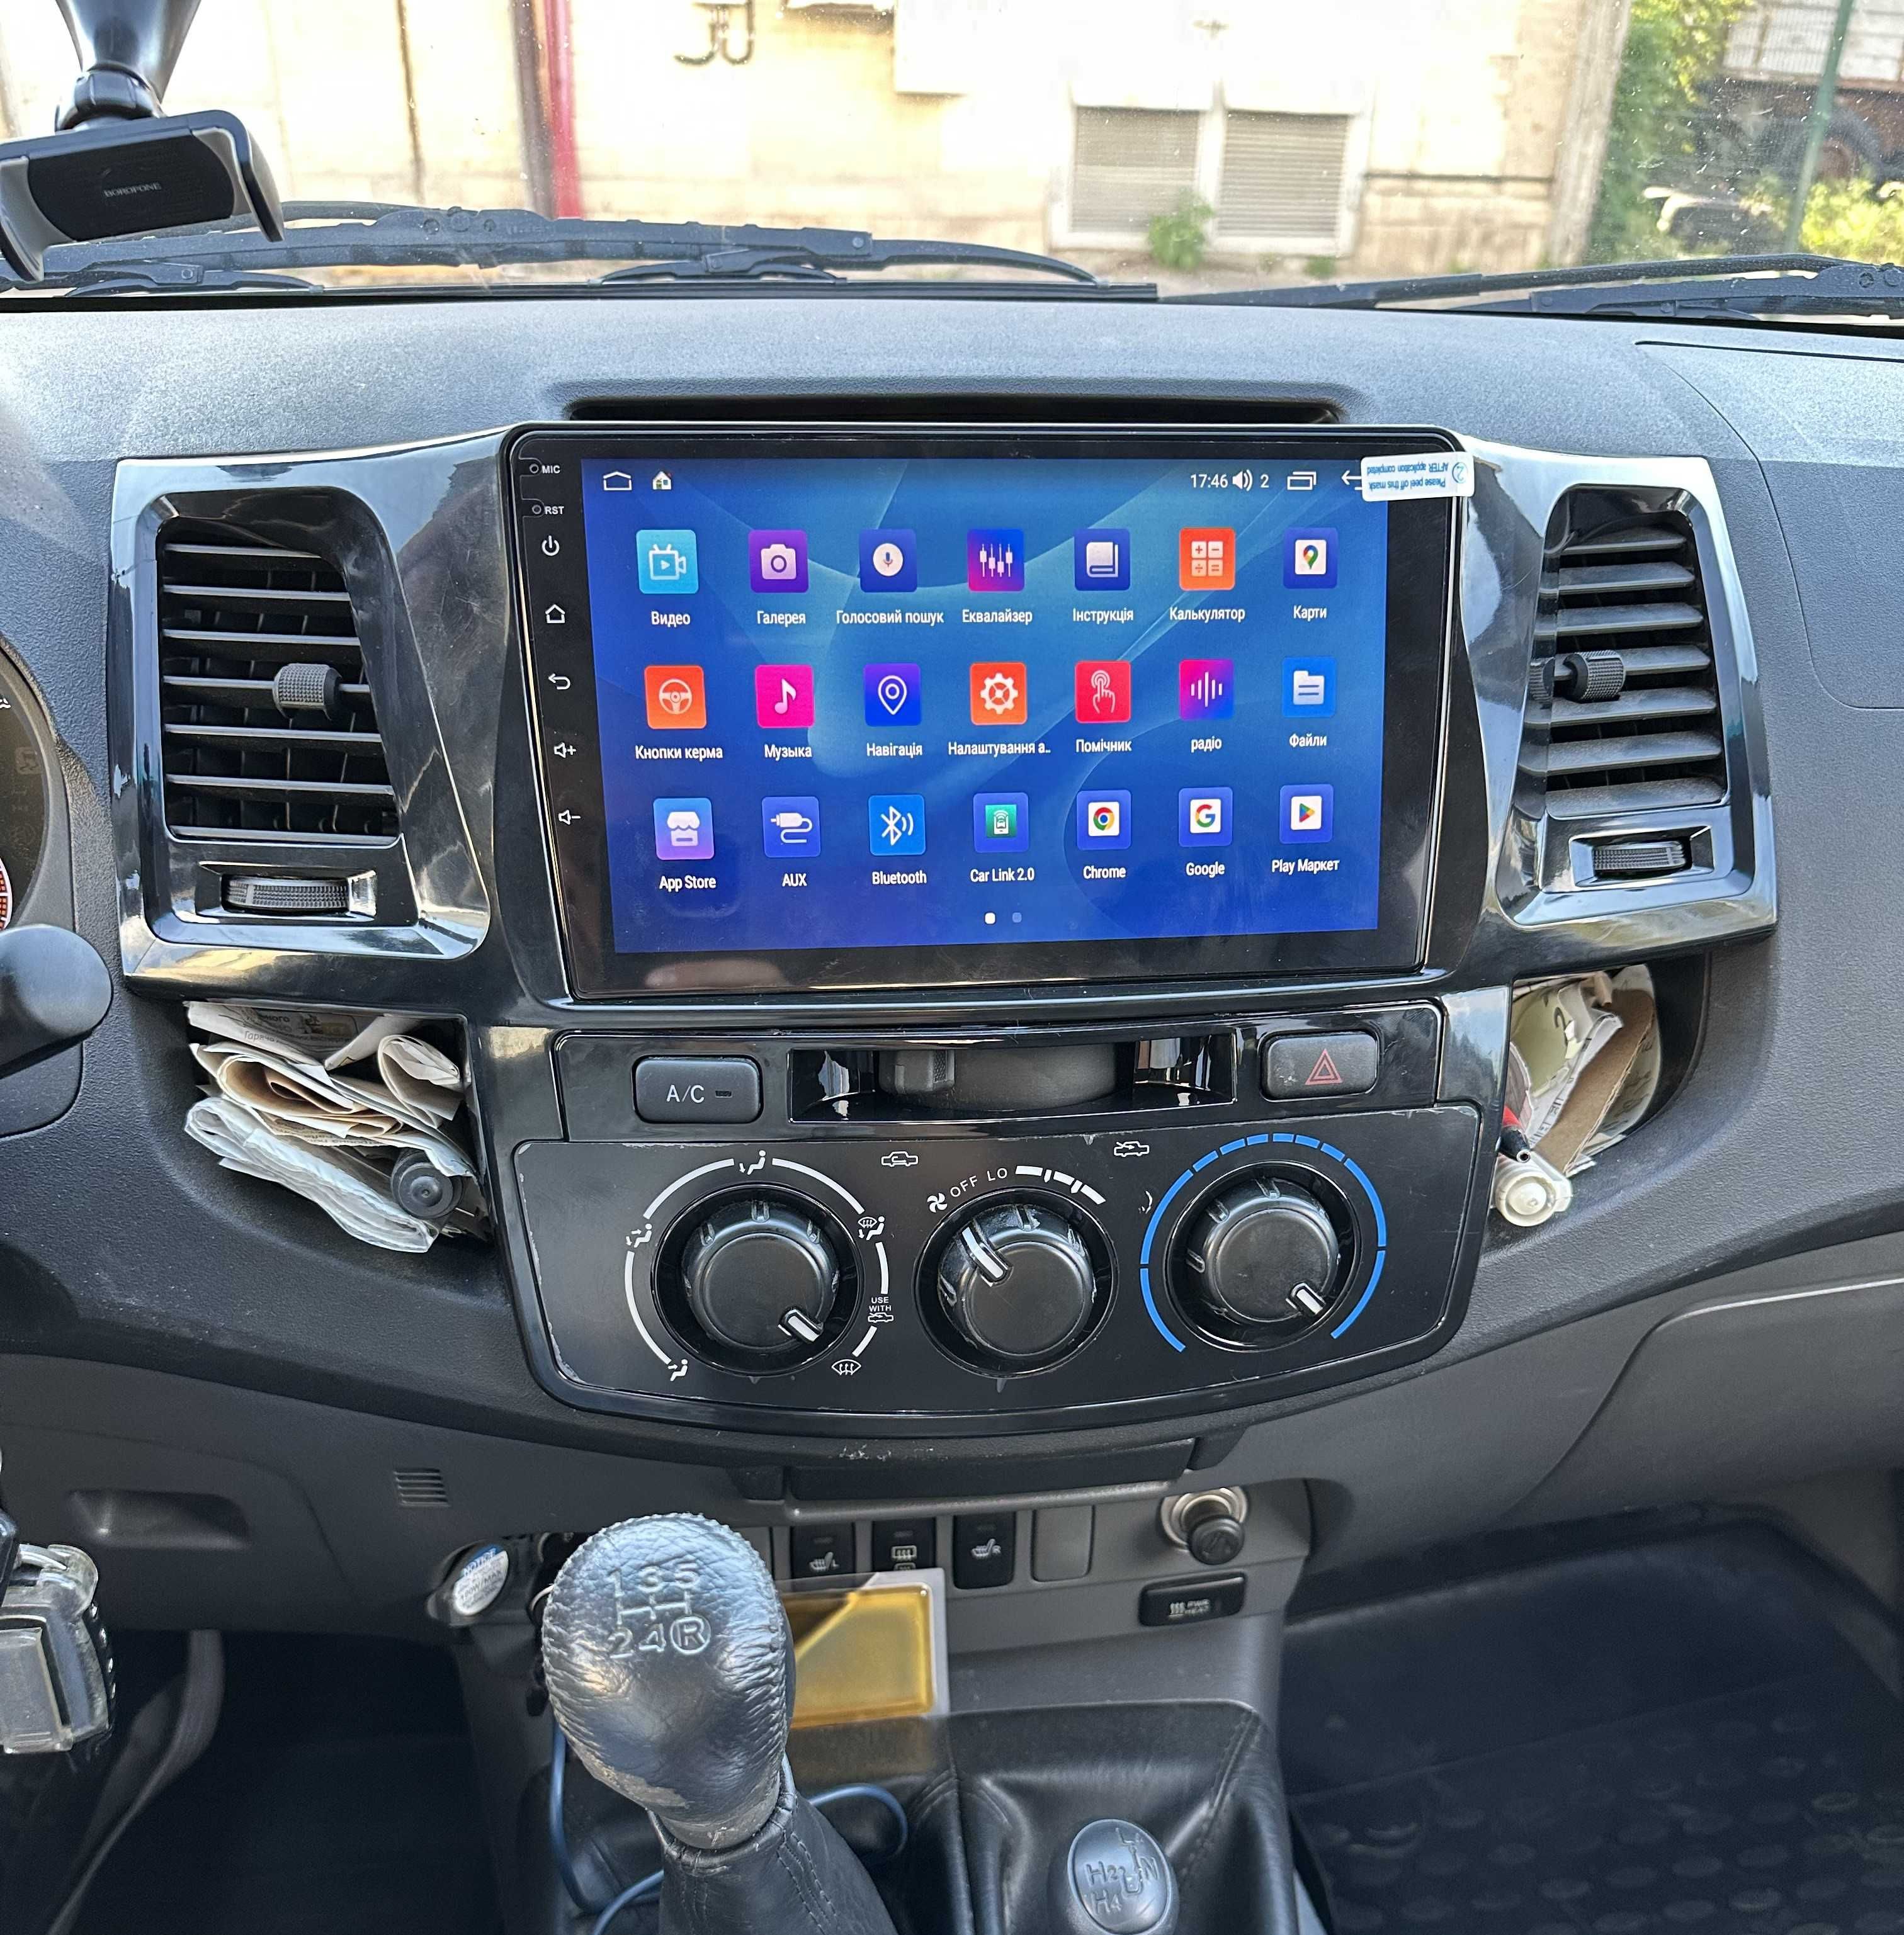 Магнітола Toyota Hilux ,CarPlay,8 ядер, Q-Led екран ,слот під SIM